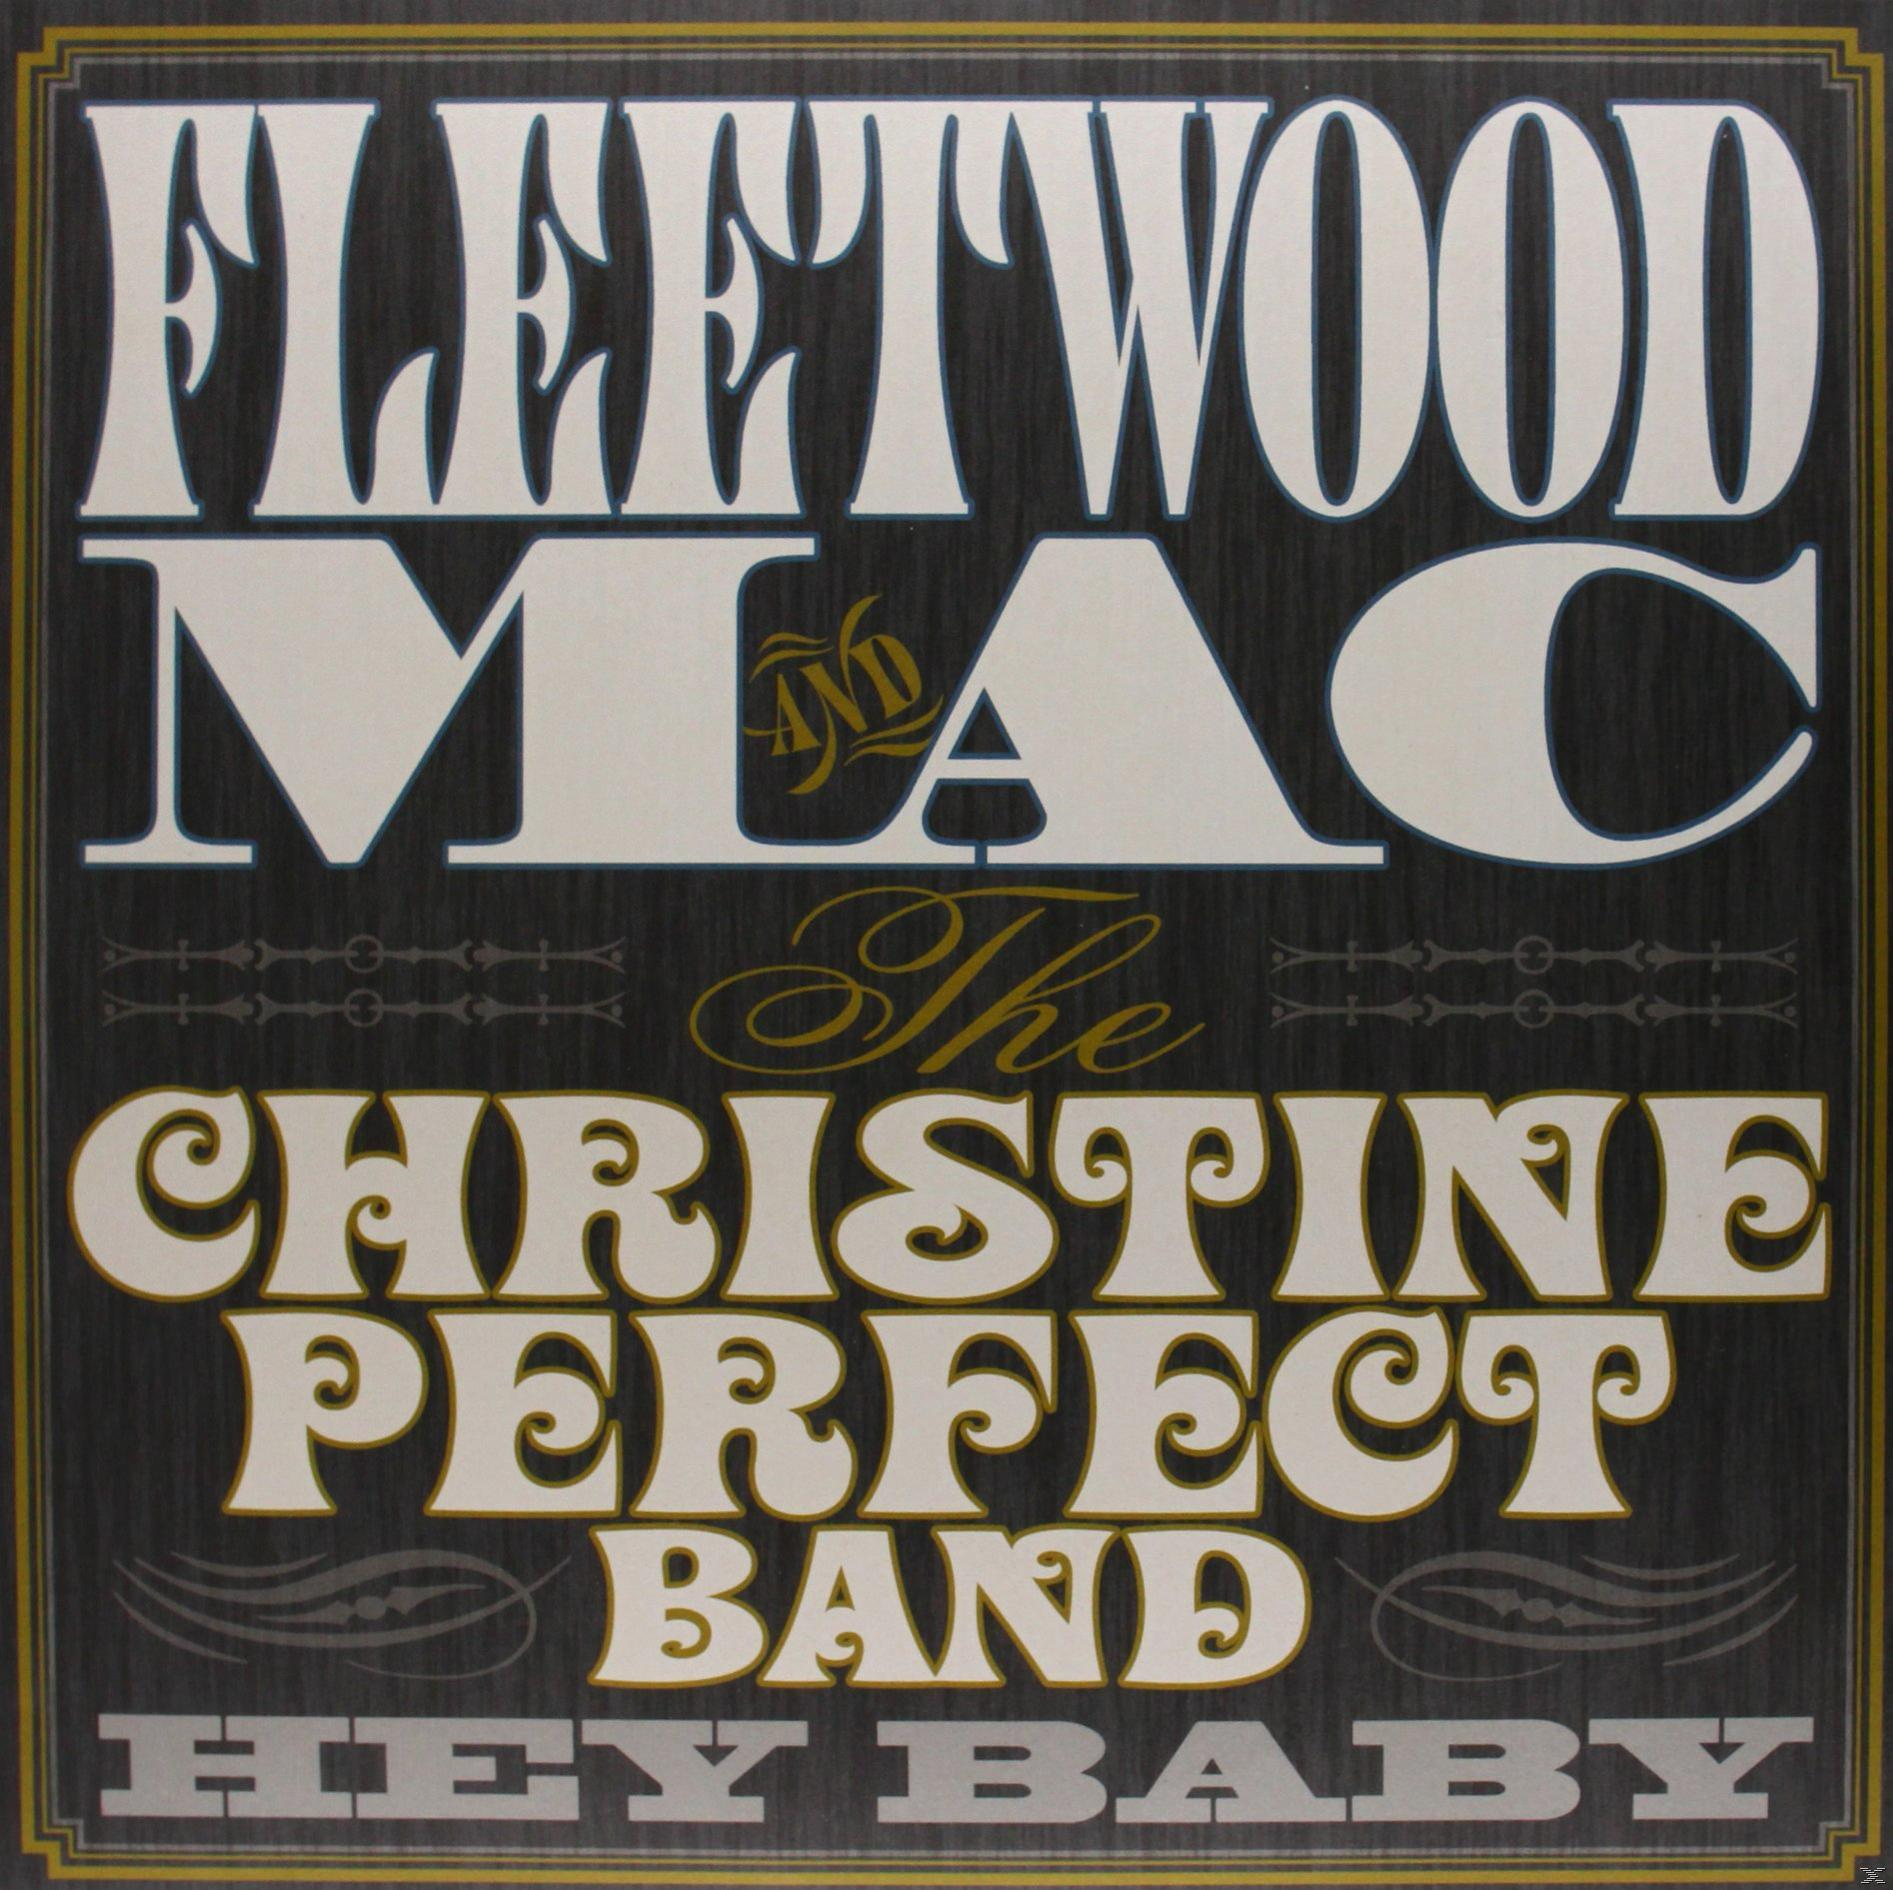 Fleetwood Mac, Christine (Vinyl) - Band Hey Baby Perfect 